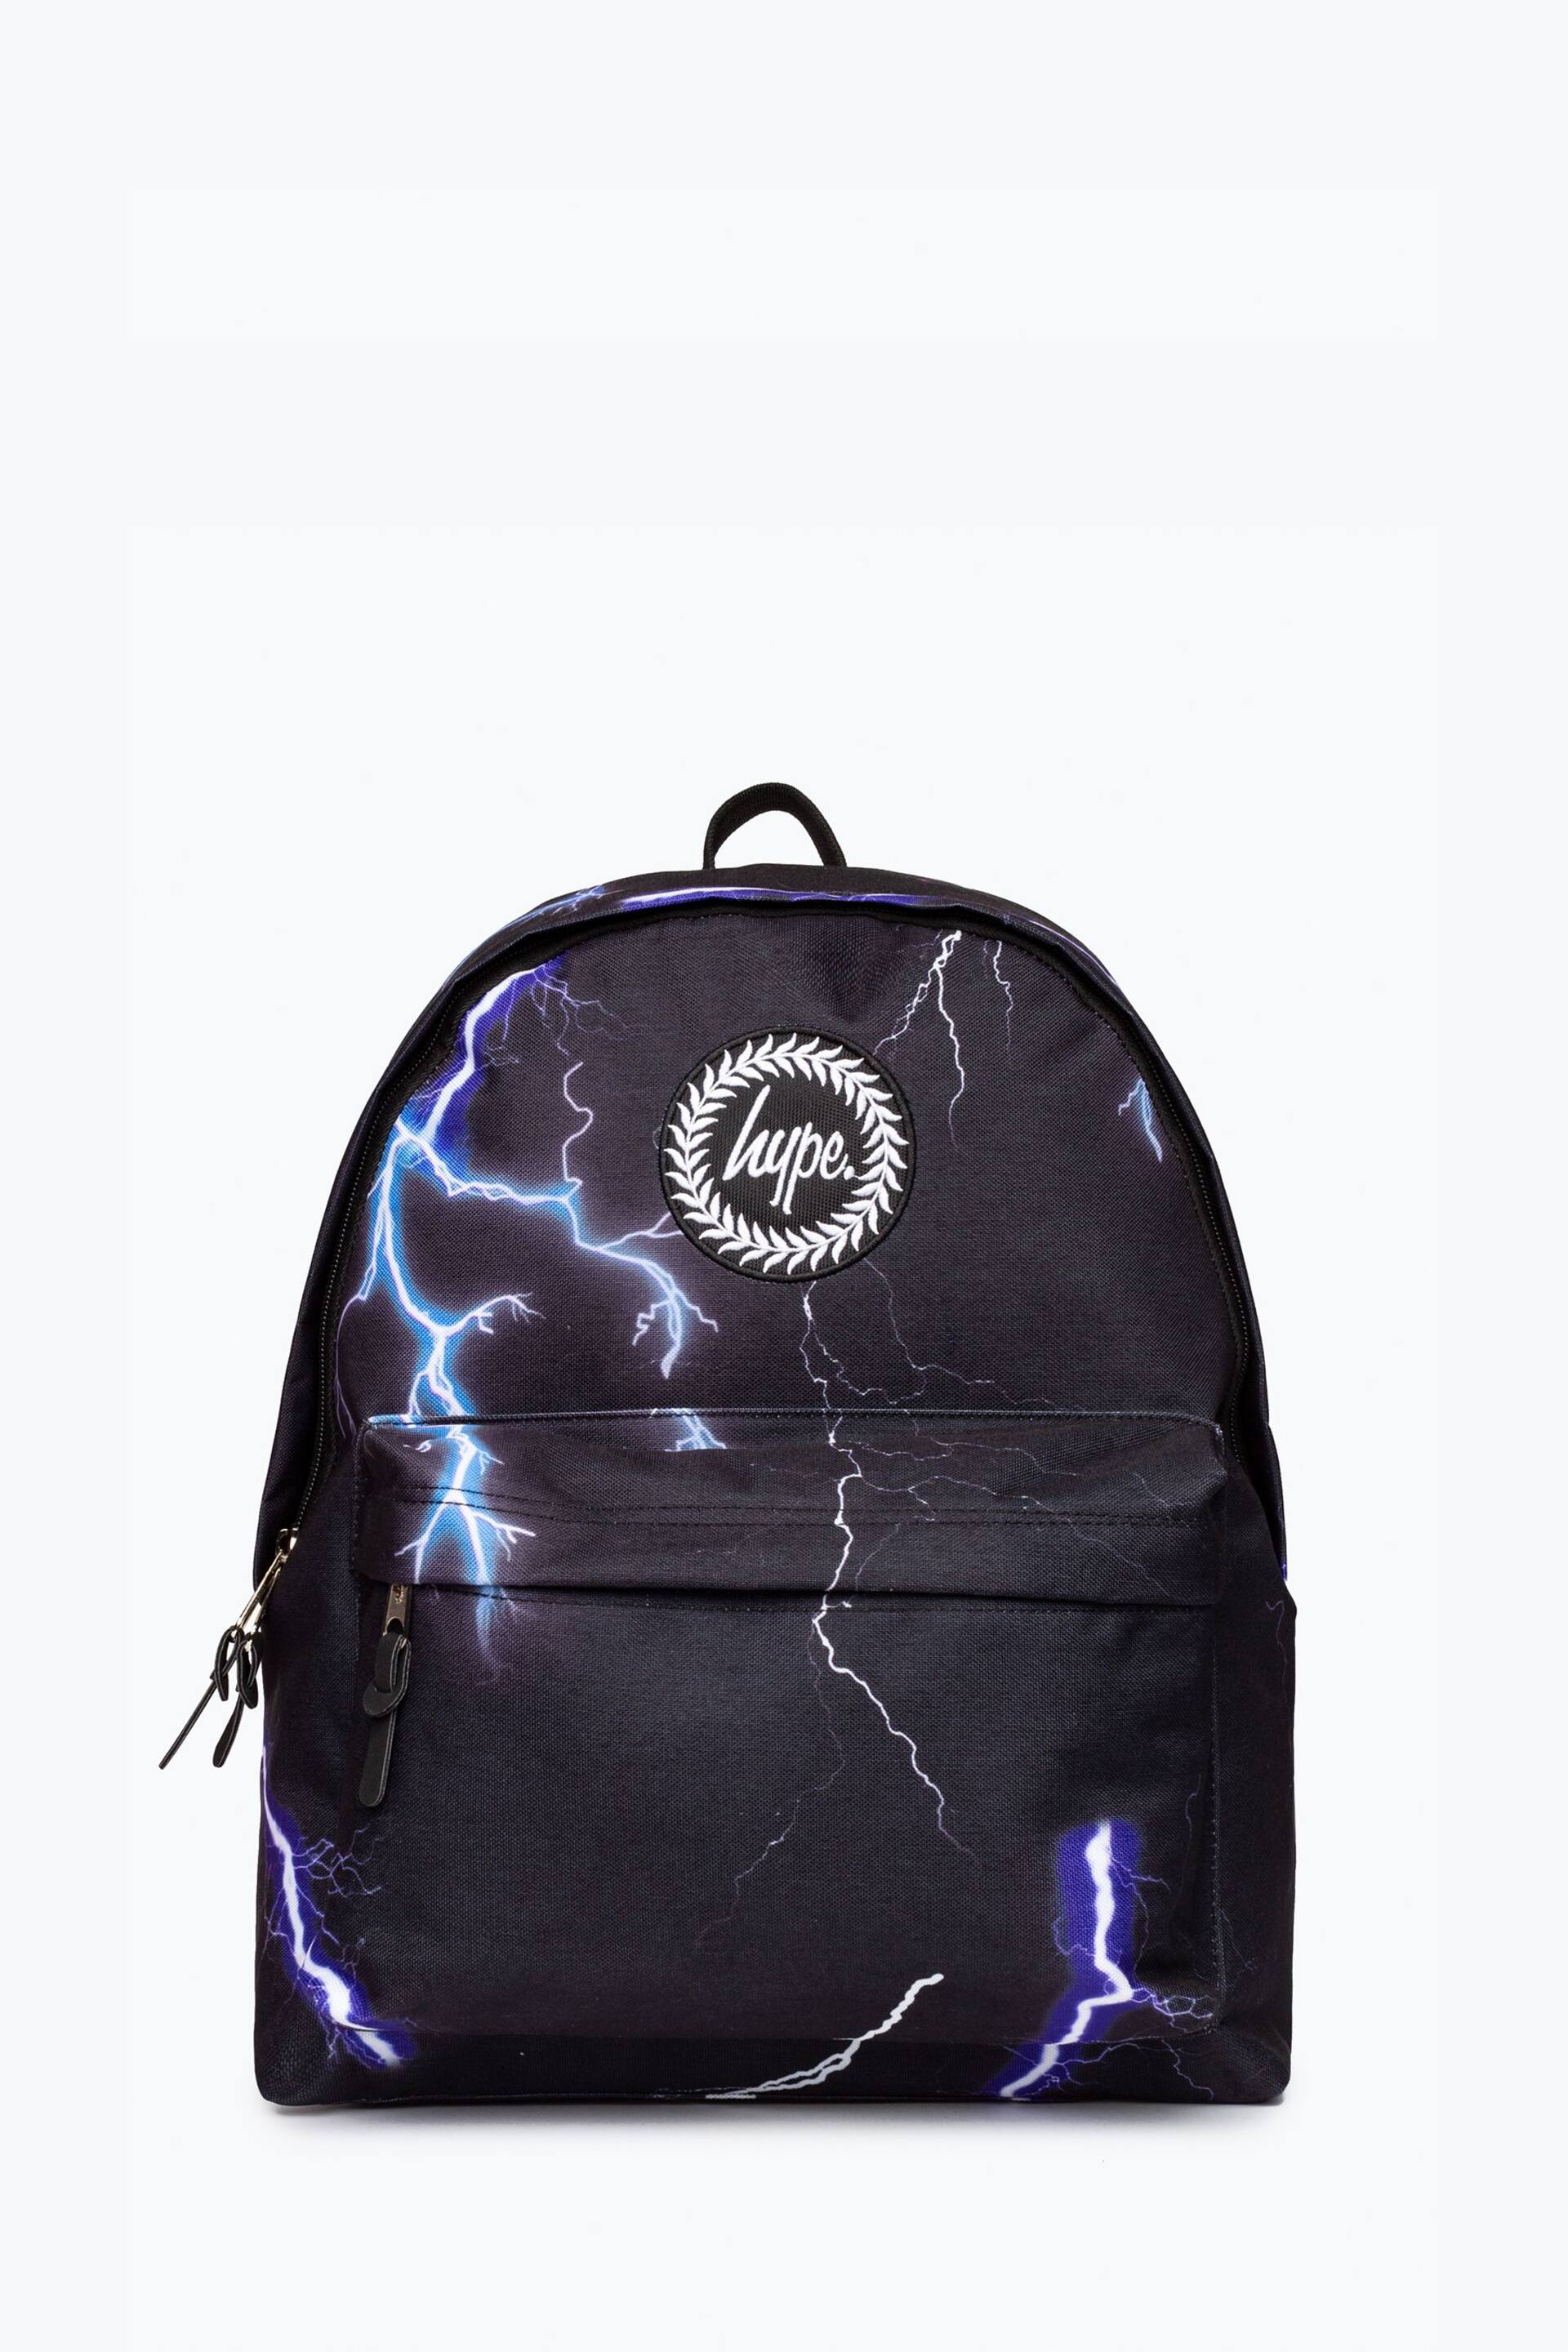 Hype. Lightning Black Backpack - Image 1 of 10